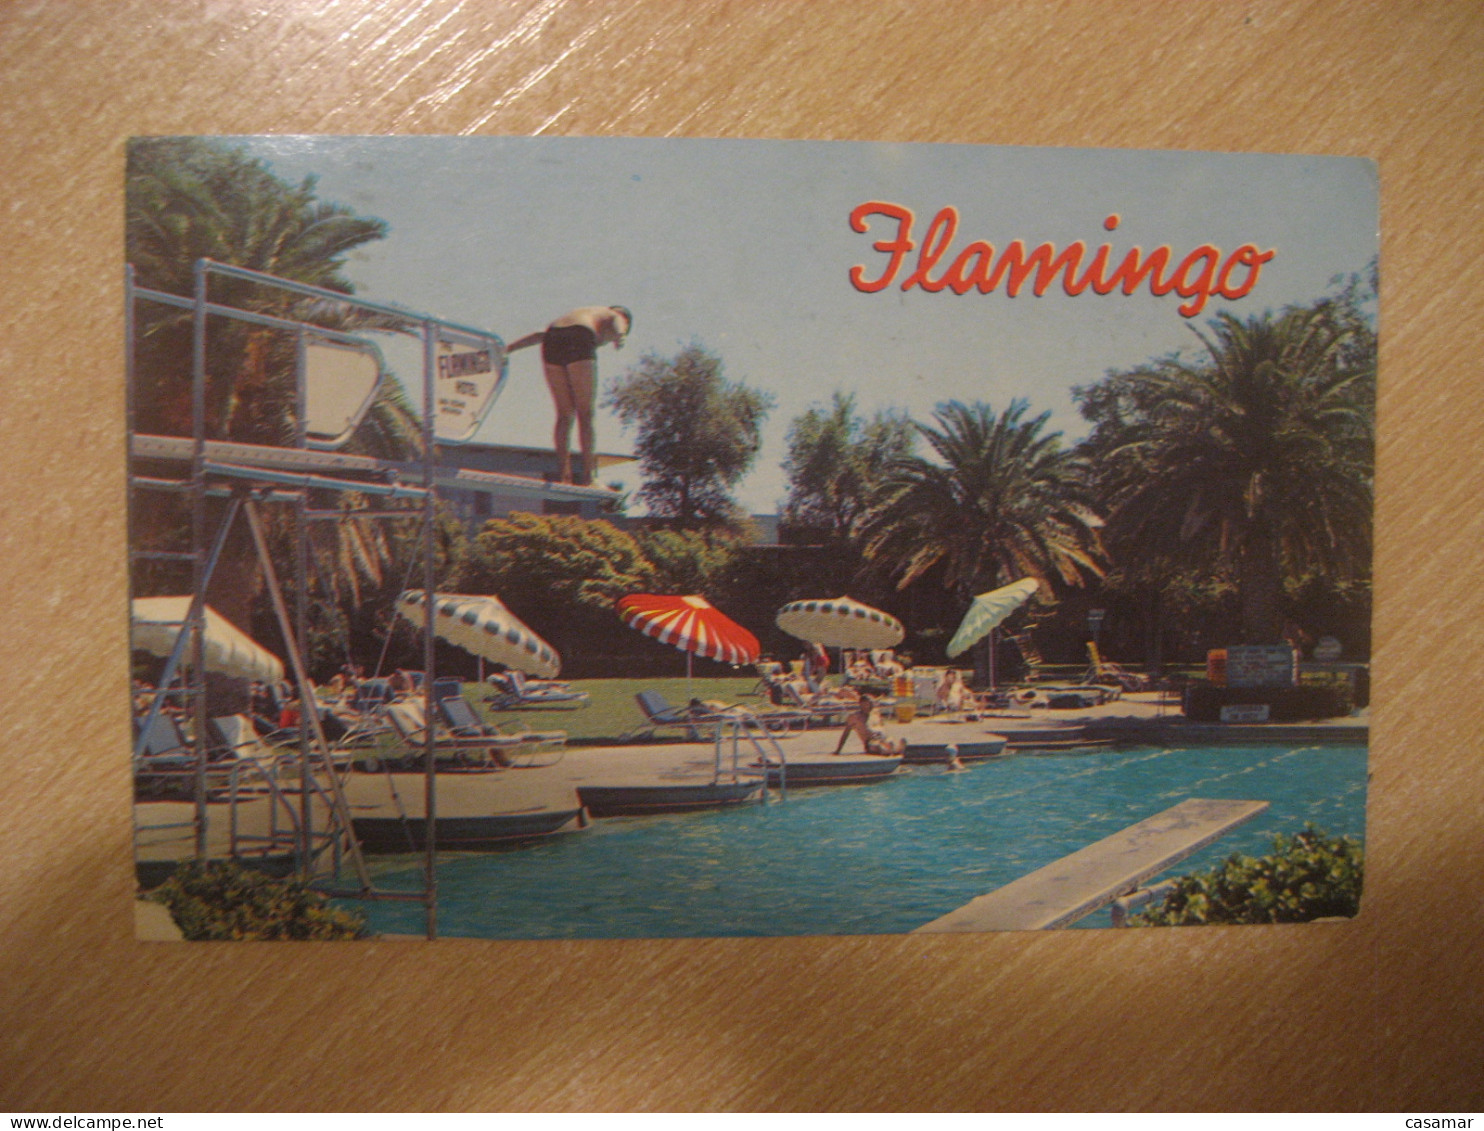 FLAMINGO Las Vegas Nevada Pool Cancel OMAHA Nebraska 1965 To Sweden Postcard USA - Las Vegas